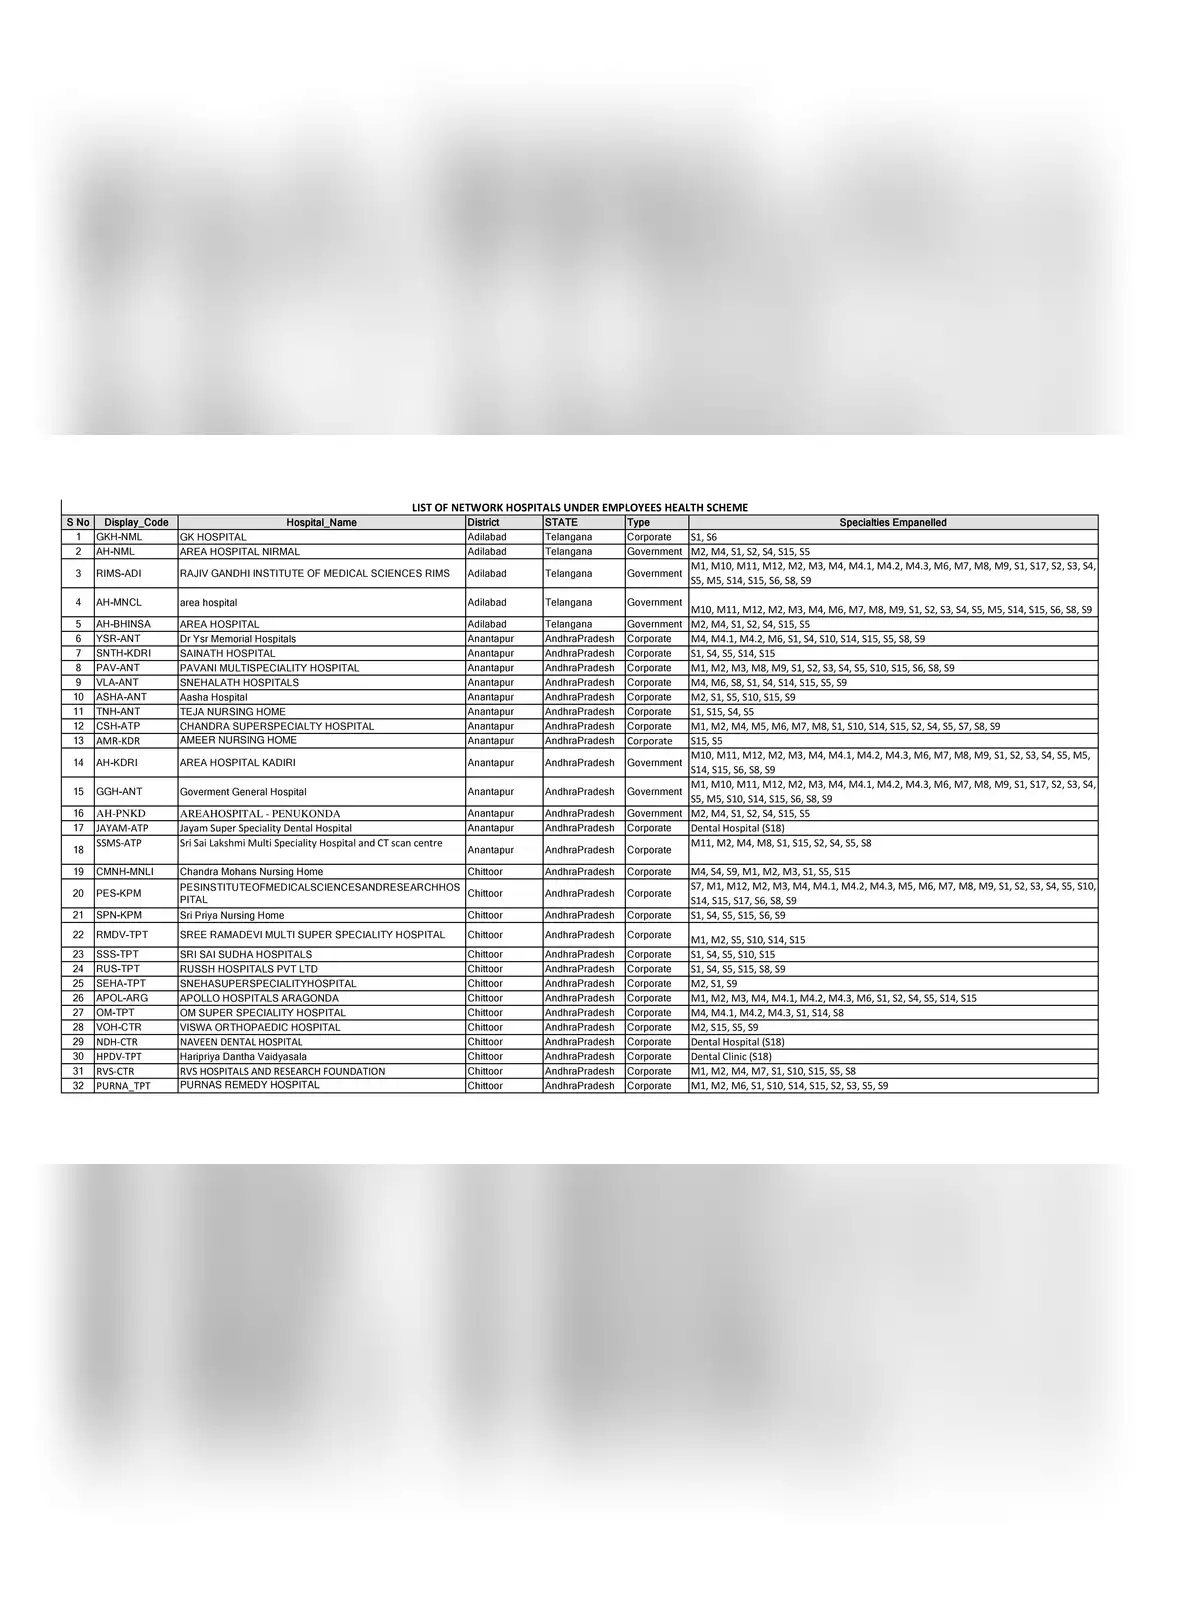 YSR Aarogyasri Hospitals List